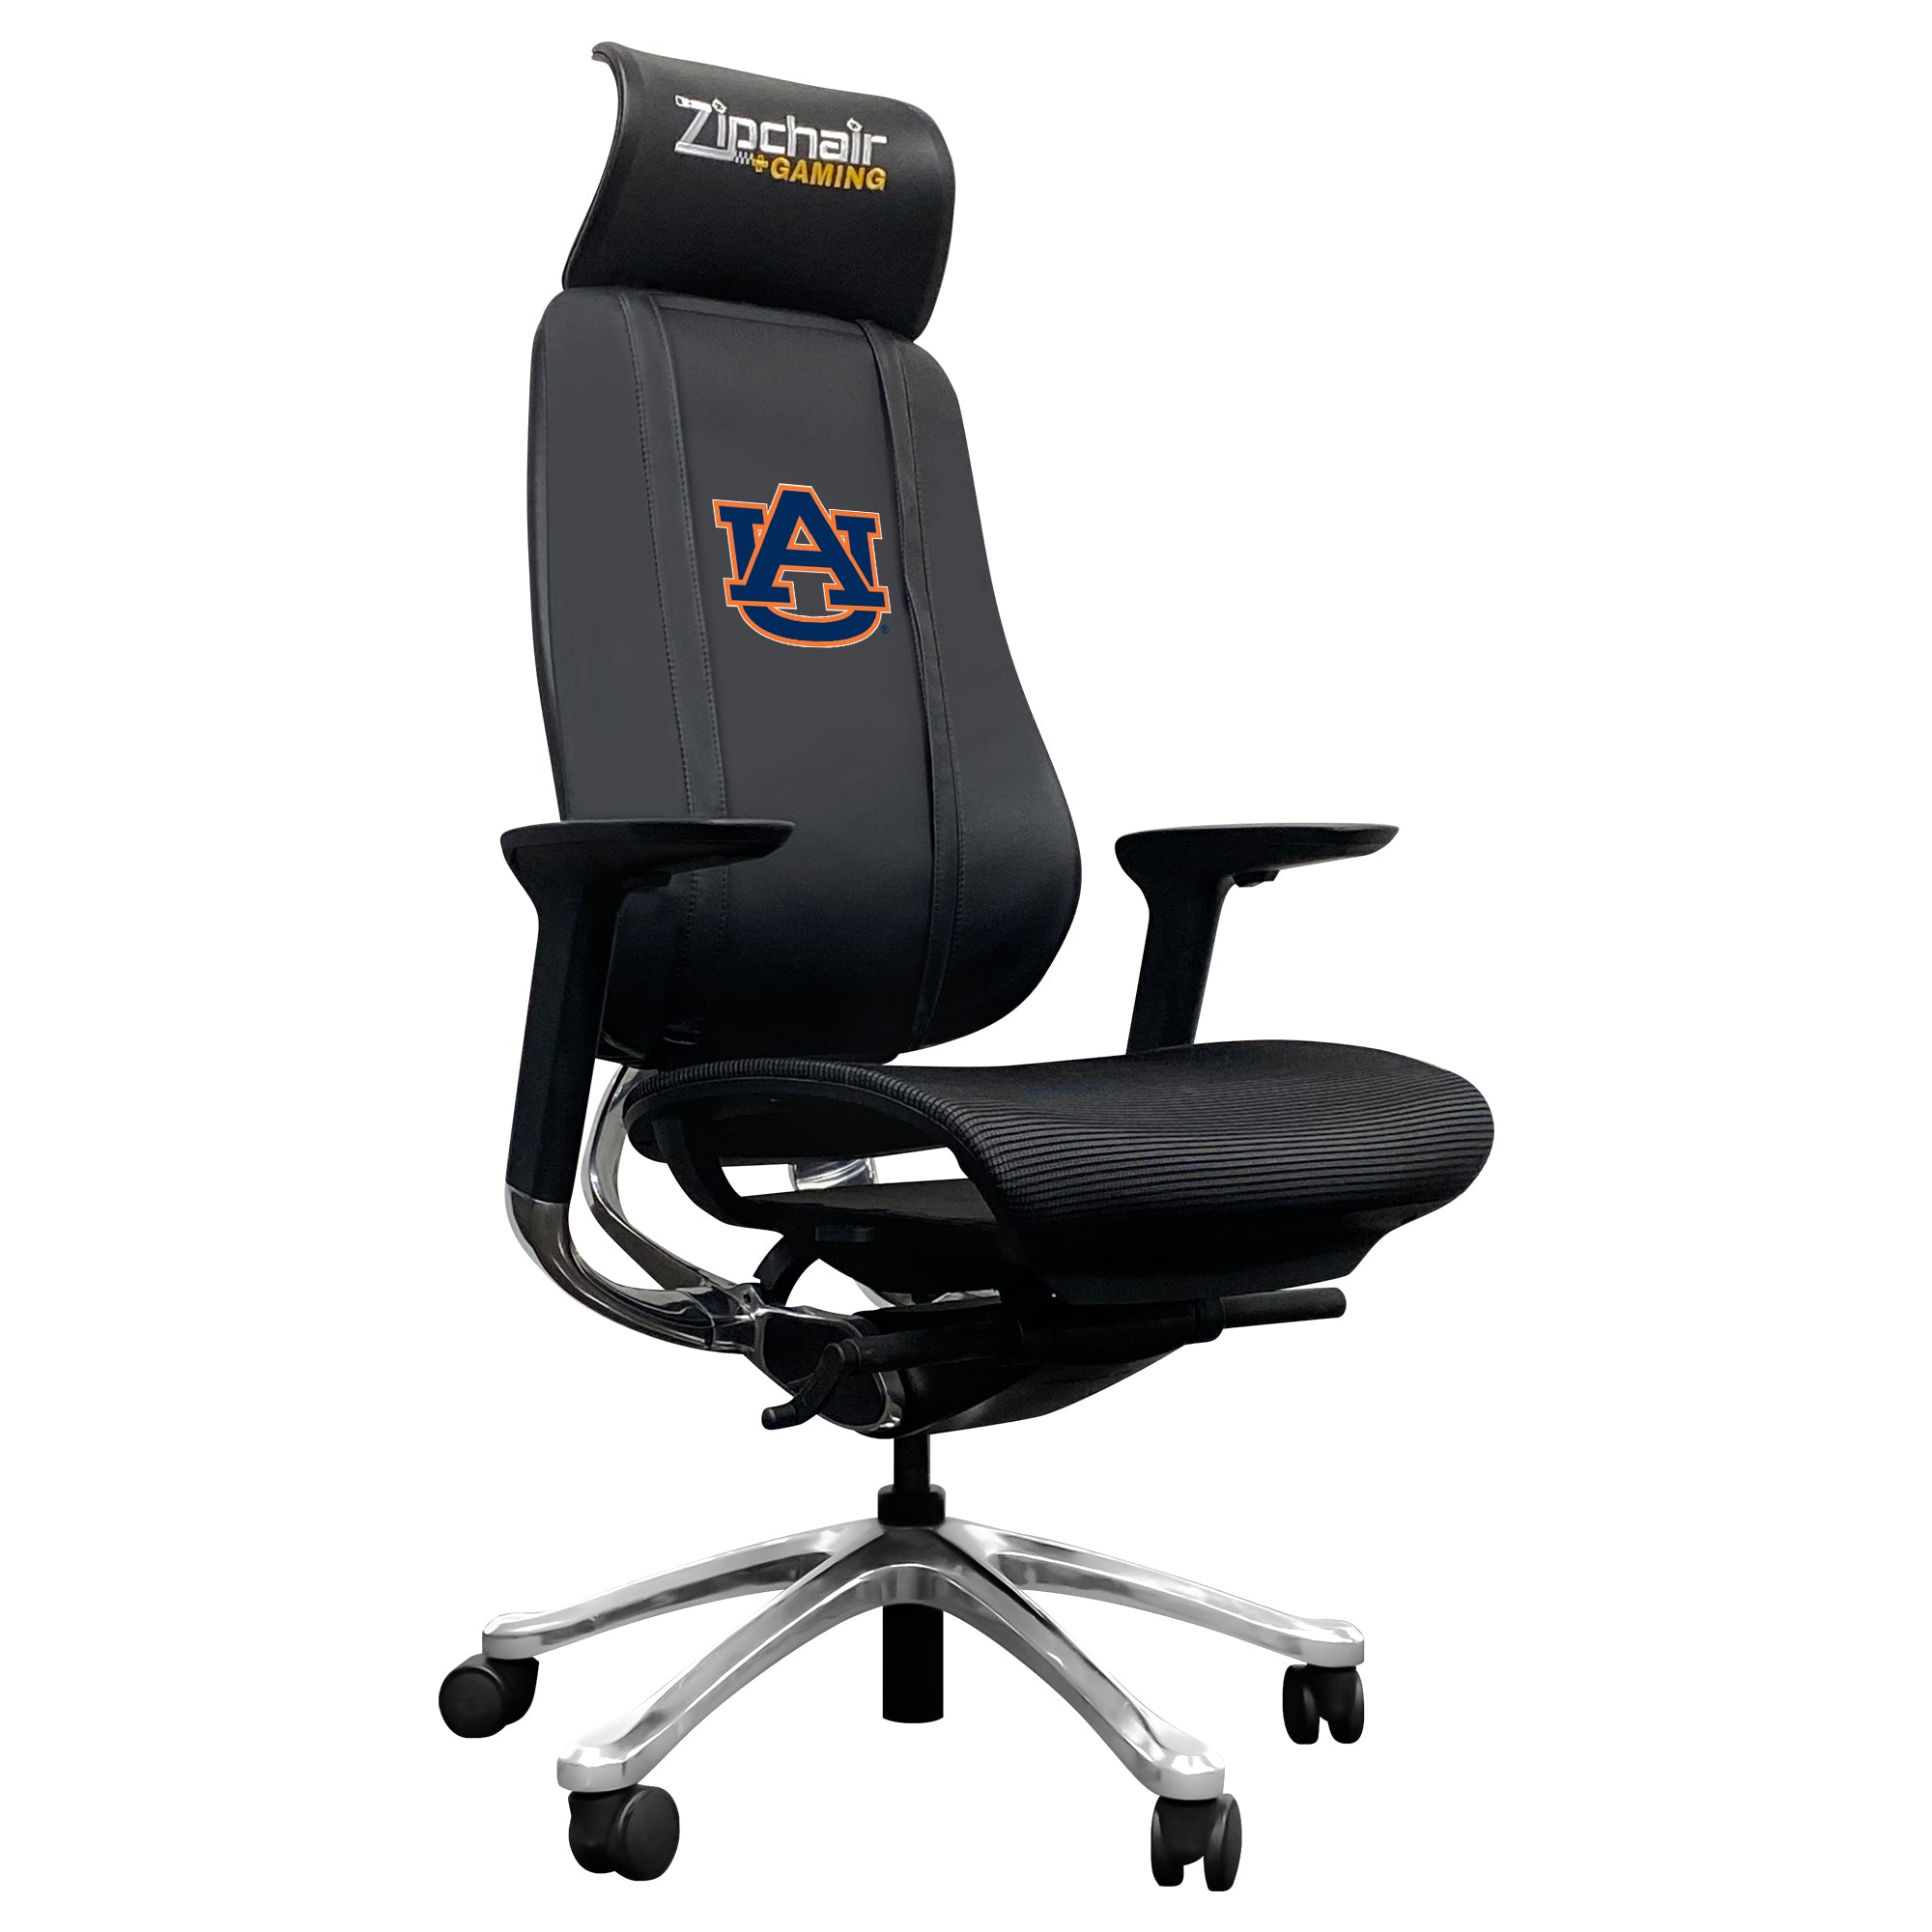 Auburn Tigers PhantomX Gaming Chair with Auburn Tigers Logo